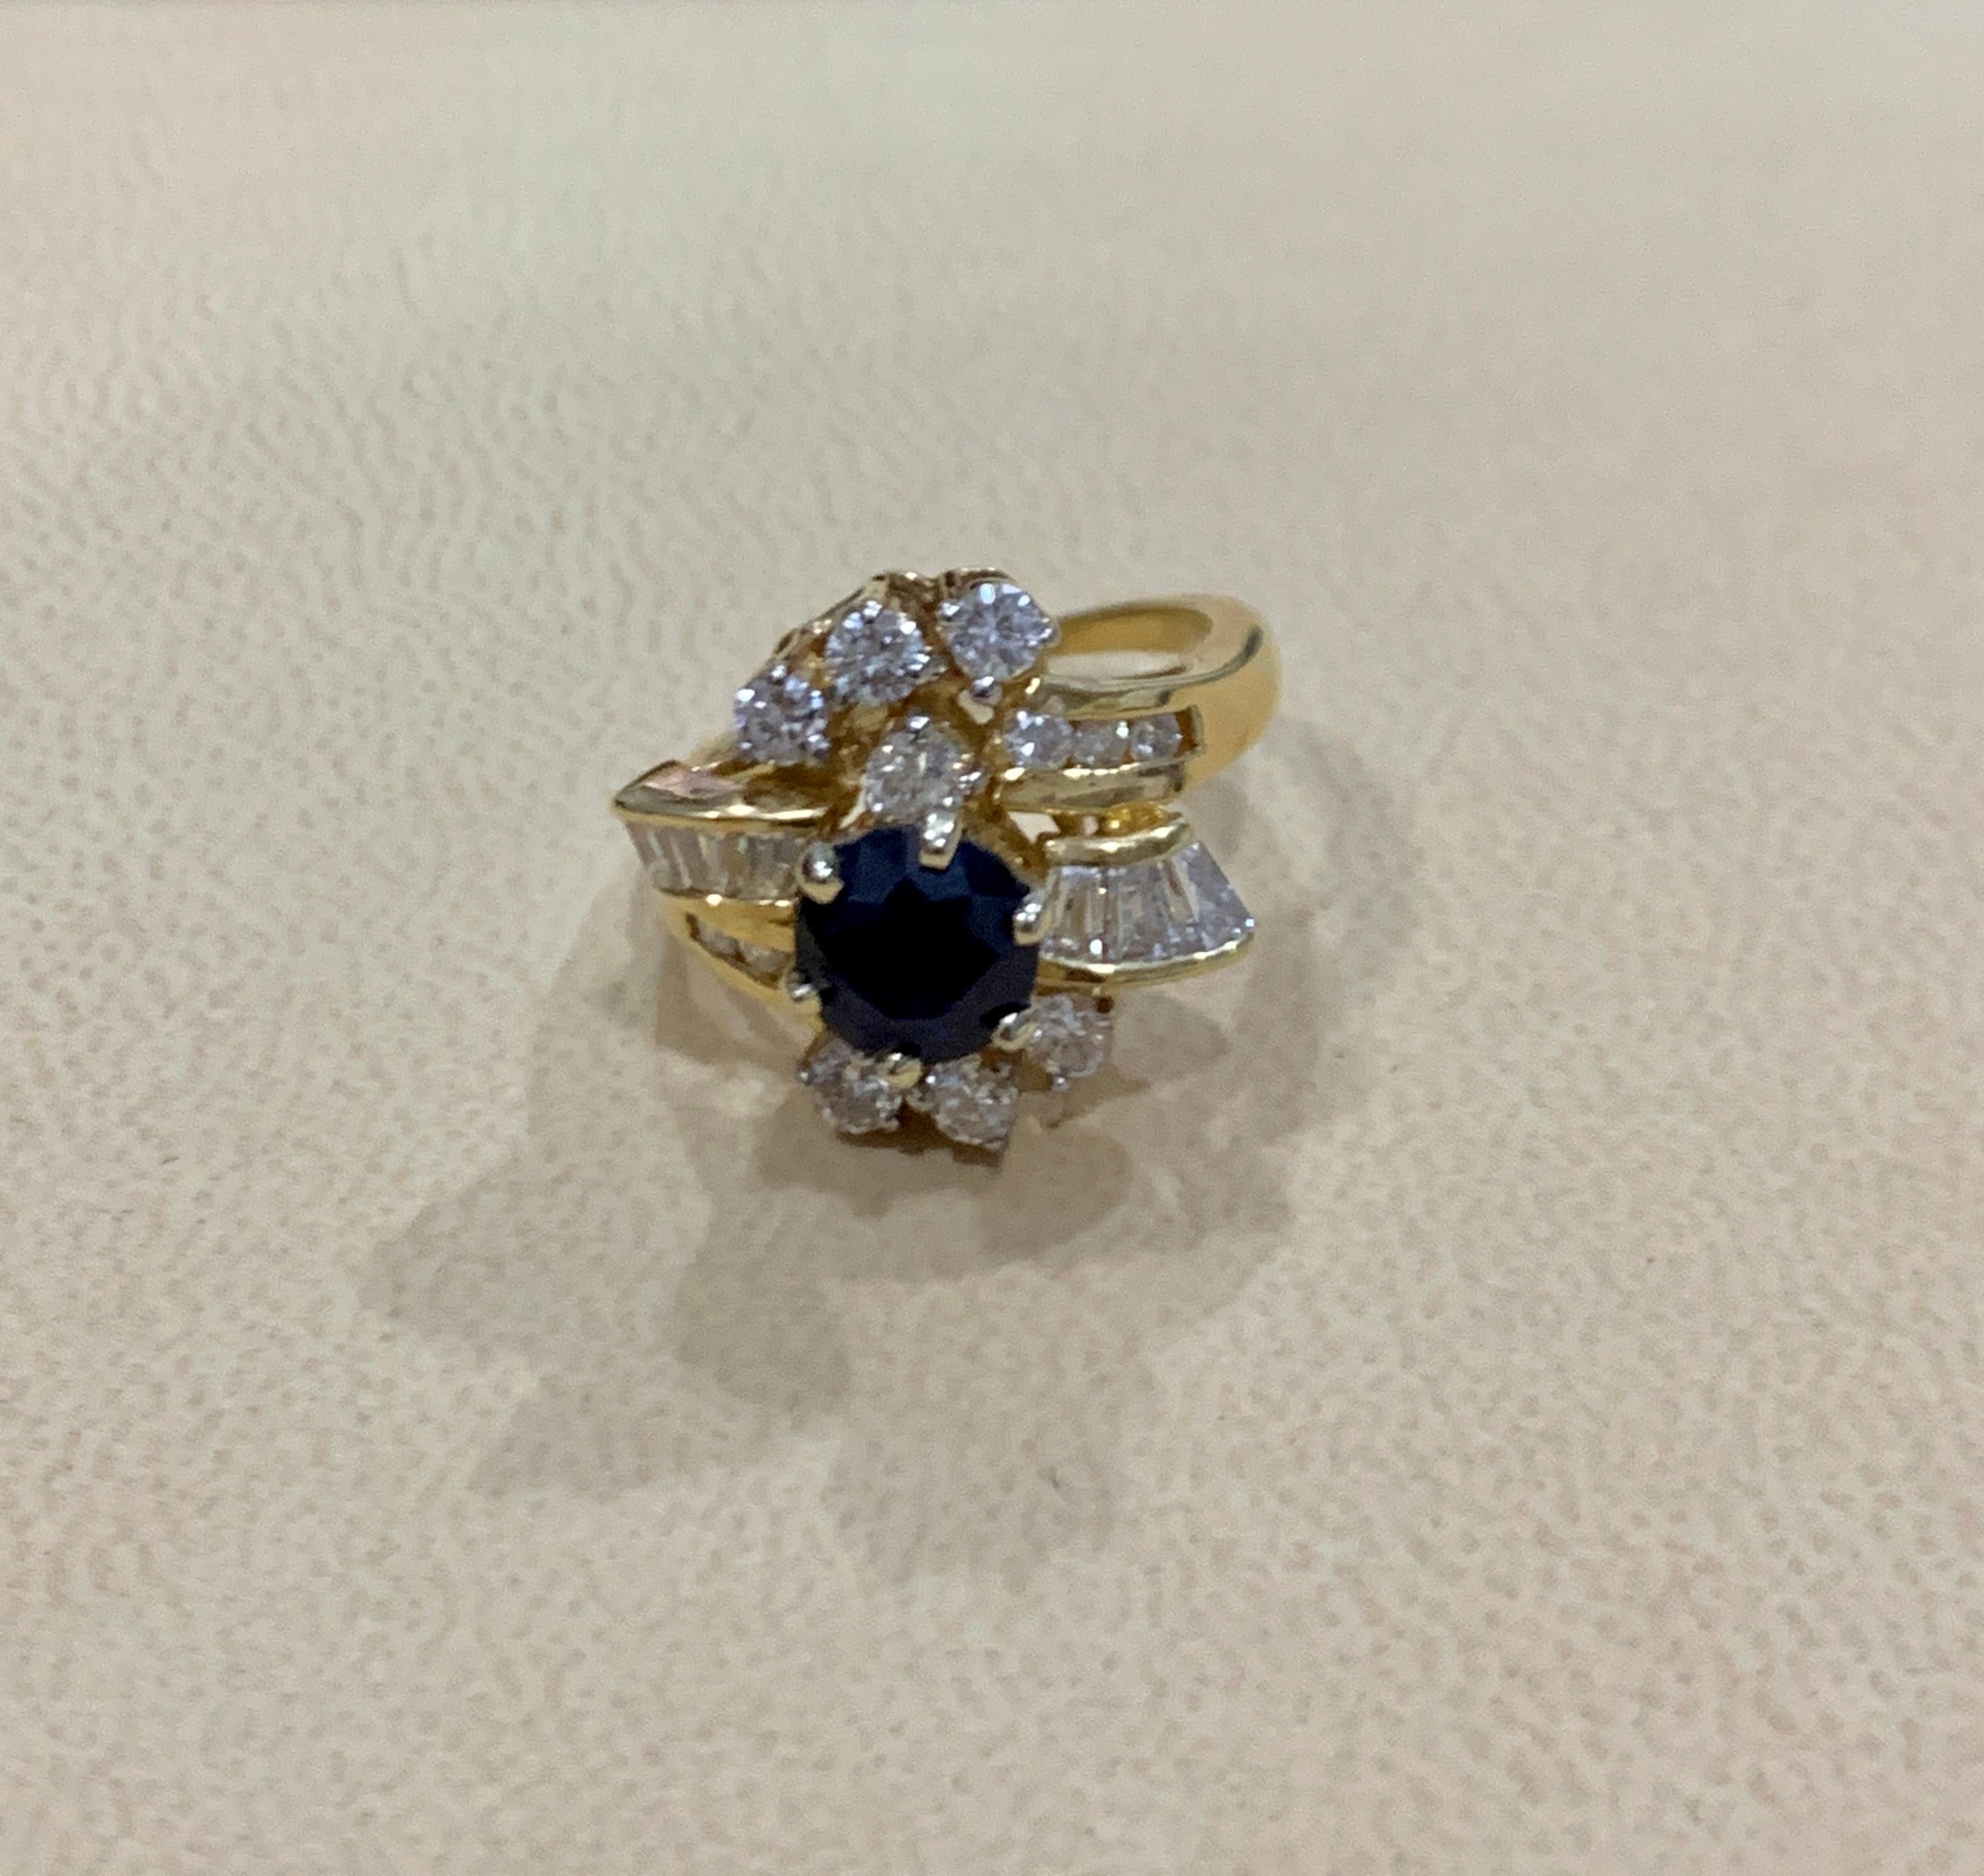 1 Carat Round Blue Sapphire & 1.65 Carat Diamond Cocktail Ring in 14 Karat Gold For Sale 3